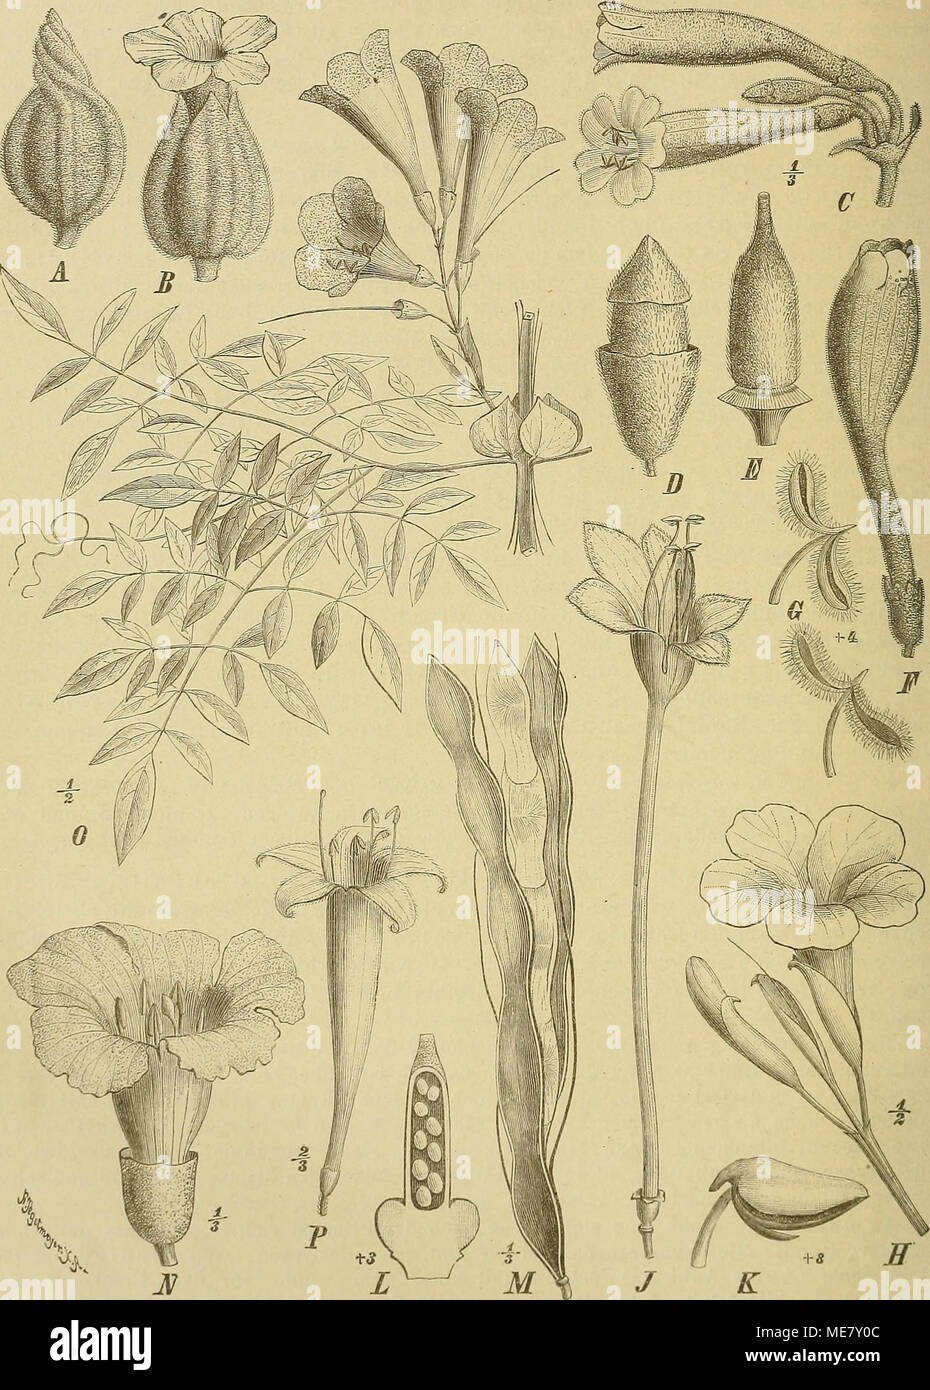 . Die Natürlichen Pflanzenfamilien : nebst ihren Gattungen und wichtigeren Arten, insbesondere den Nutzpflanzen . Fig. &amp;9. Ä, B Fridericia speciosa Mart. A Knospe; B Bh — C Phaedranilms huccinaiorius (P. DC.) Miers, Bl. — I&gt;, E lundia wmlrosa (H. B. K.) Bur. D Knospe; E Frkn. - F, 0 Adcnocalijmma foveolatum (P. DC.) K. ScU. FBI.; 0 Stb. — H Phryganocydia corymhoaa (Vent.) Bnr., Teilblütenstand. — J, K mUüif/toma hortexsts hnn. hl. / Bl.; K Staubbeutel. — /-. M Mcmora nodosa (P. DC.) Miers. L Frkn. angcsclmitten ; .1/ Kr. - N Oroxi/lon tiidi- cutn (Linn.) Vent., Bl. — 0 Pleonotoma jaümi Stock Photo